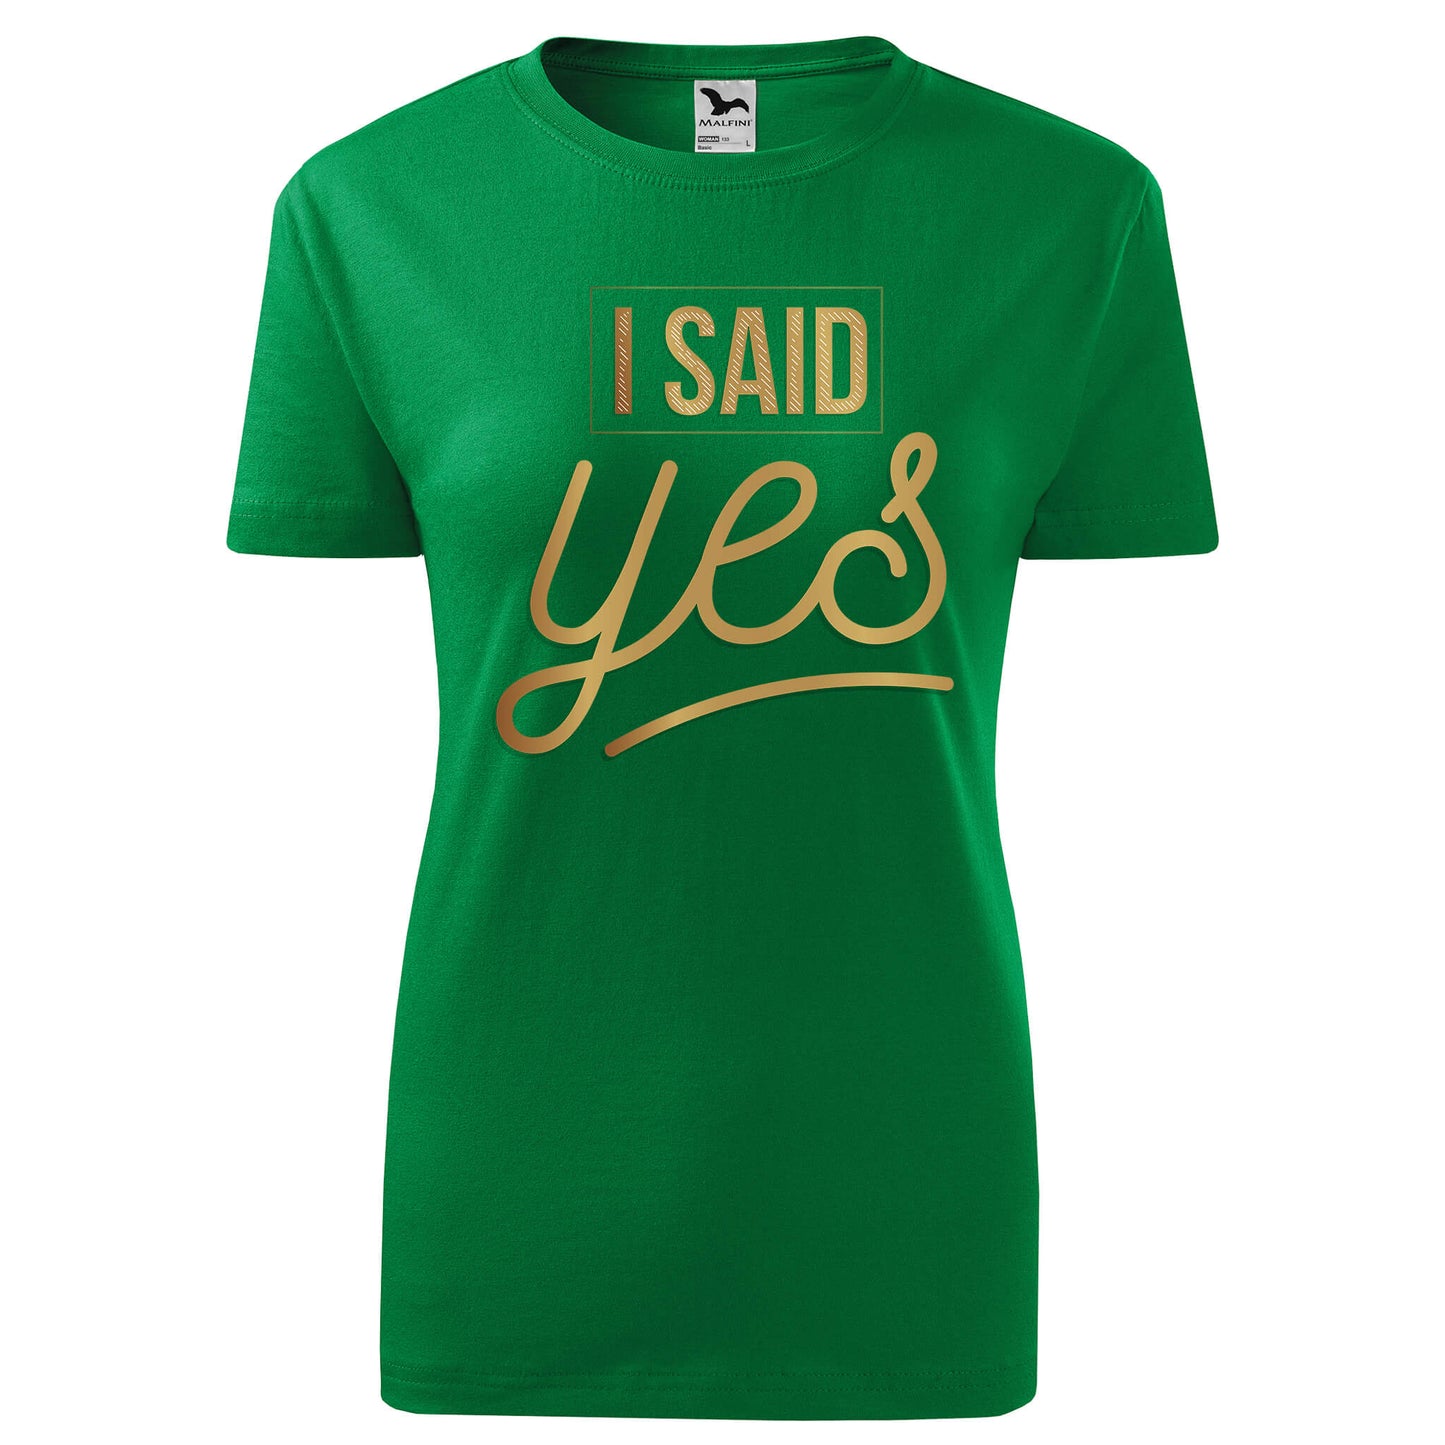 I said yes t-shirt - rvdesignprint